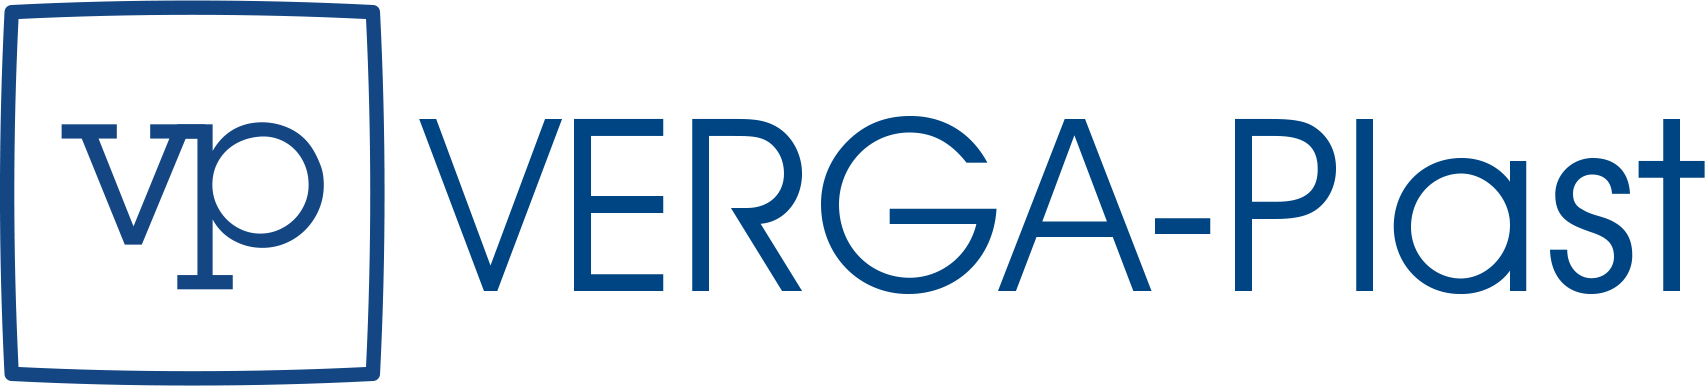 Logotipo VERGA-Plast